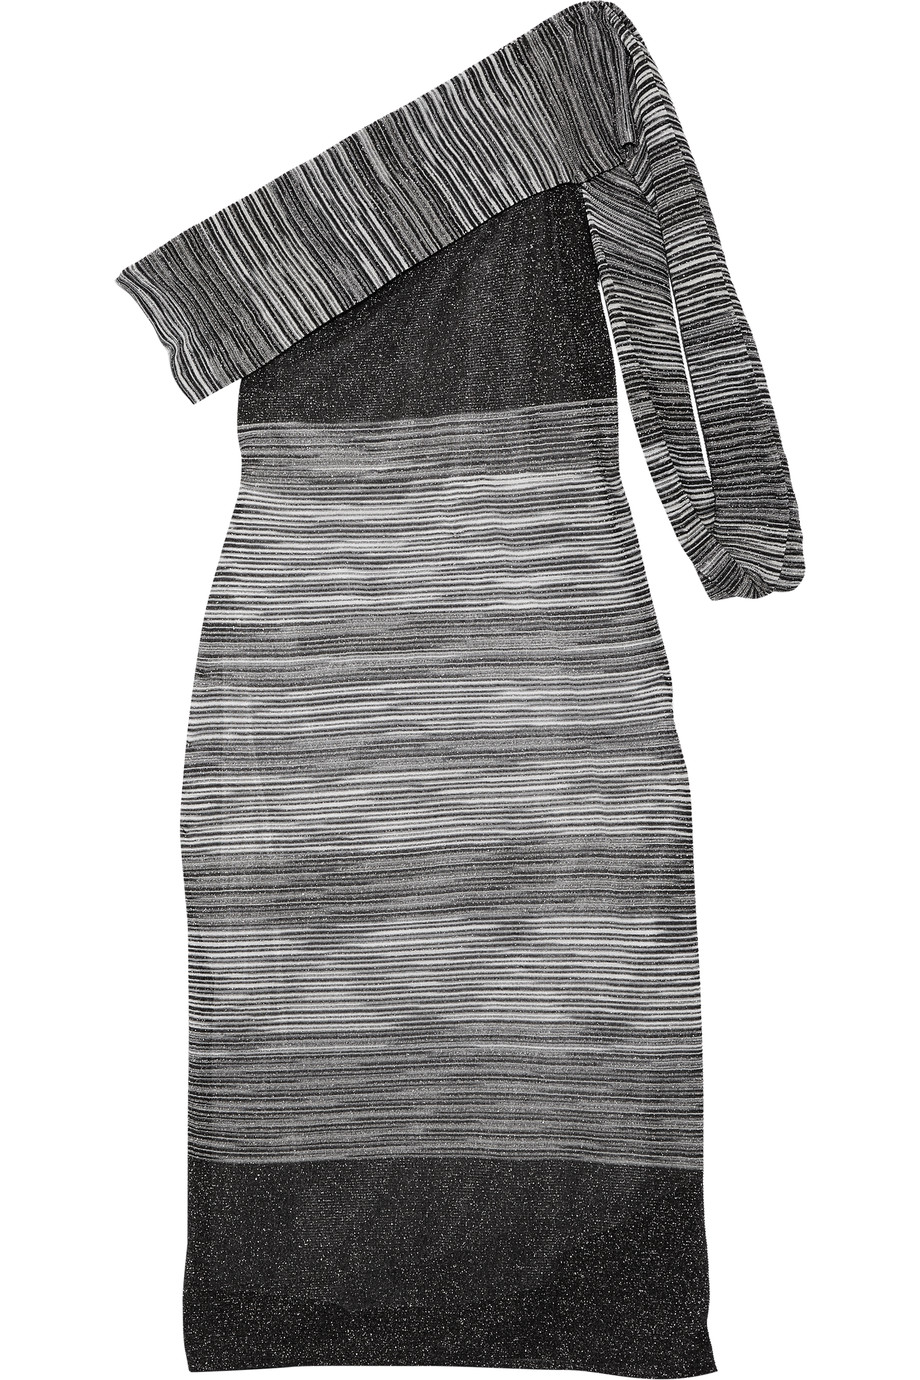 Missoni One-shoulder Metallic Crochet-knit Dress | ModeSens